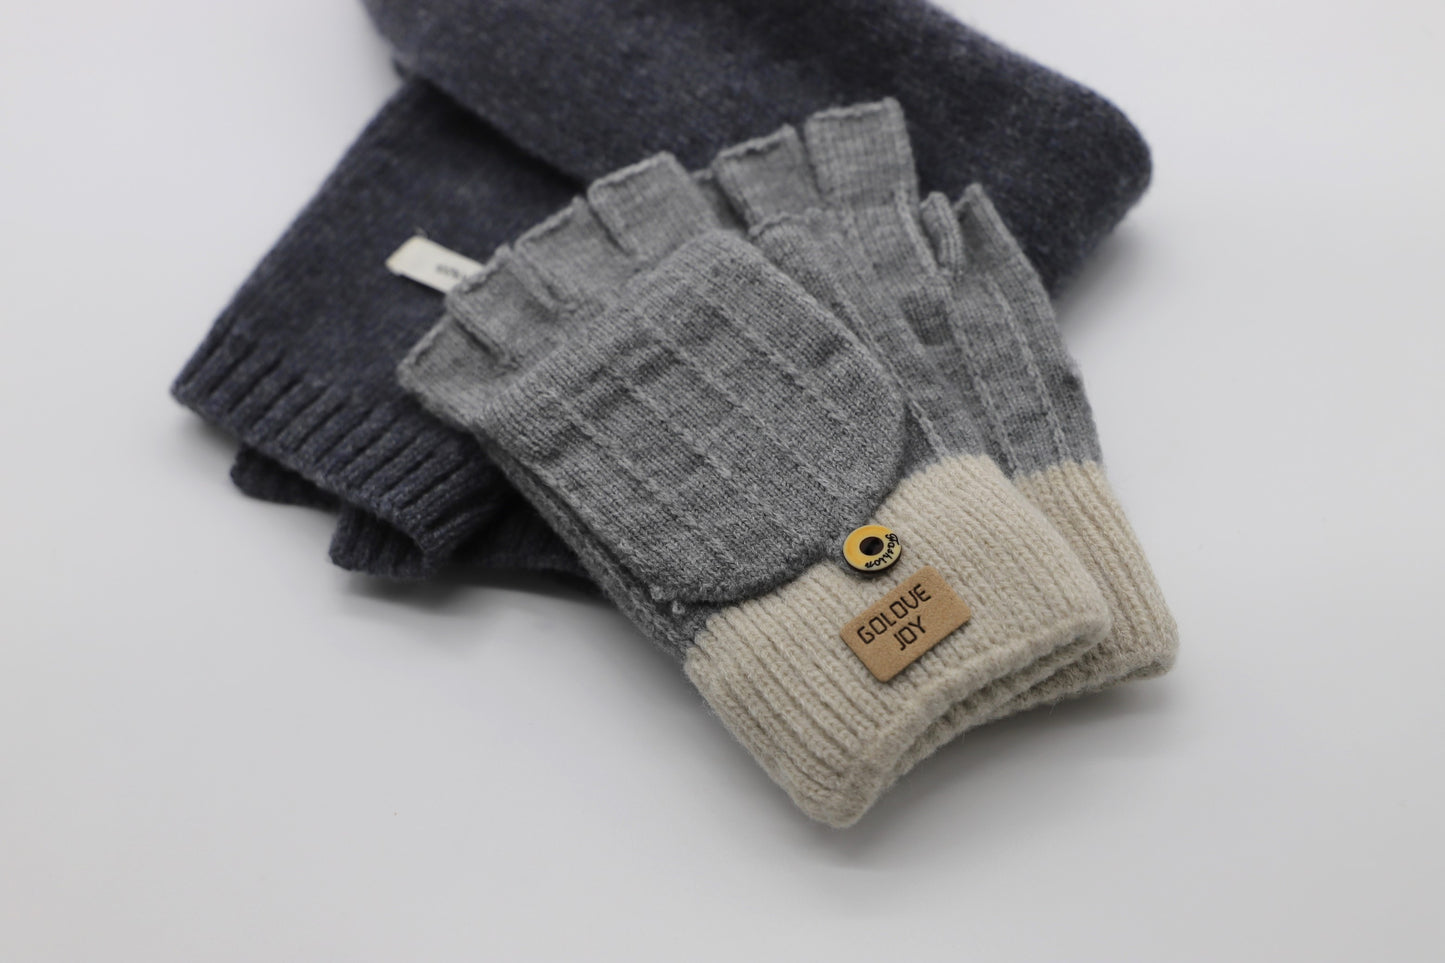 Warm Flip-Top Gloves for Women from Wool Blend - Medium Gray - Scarf Designers